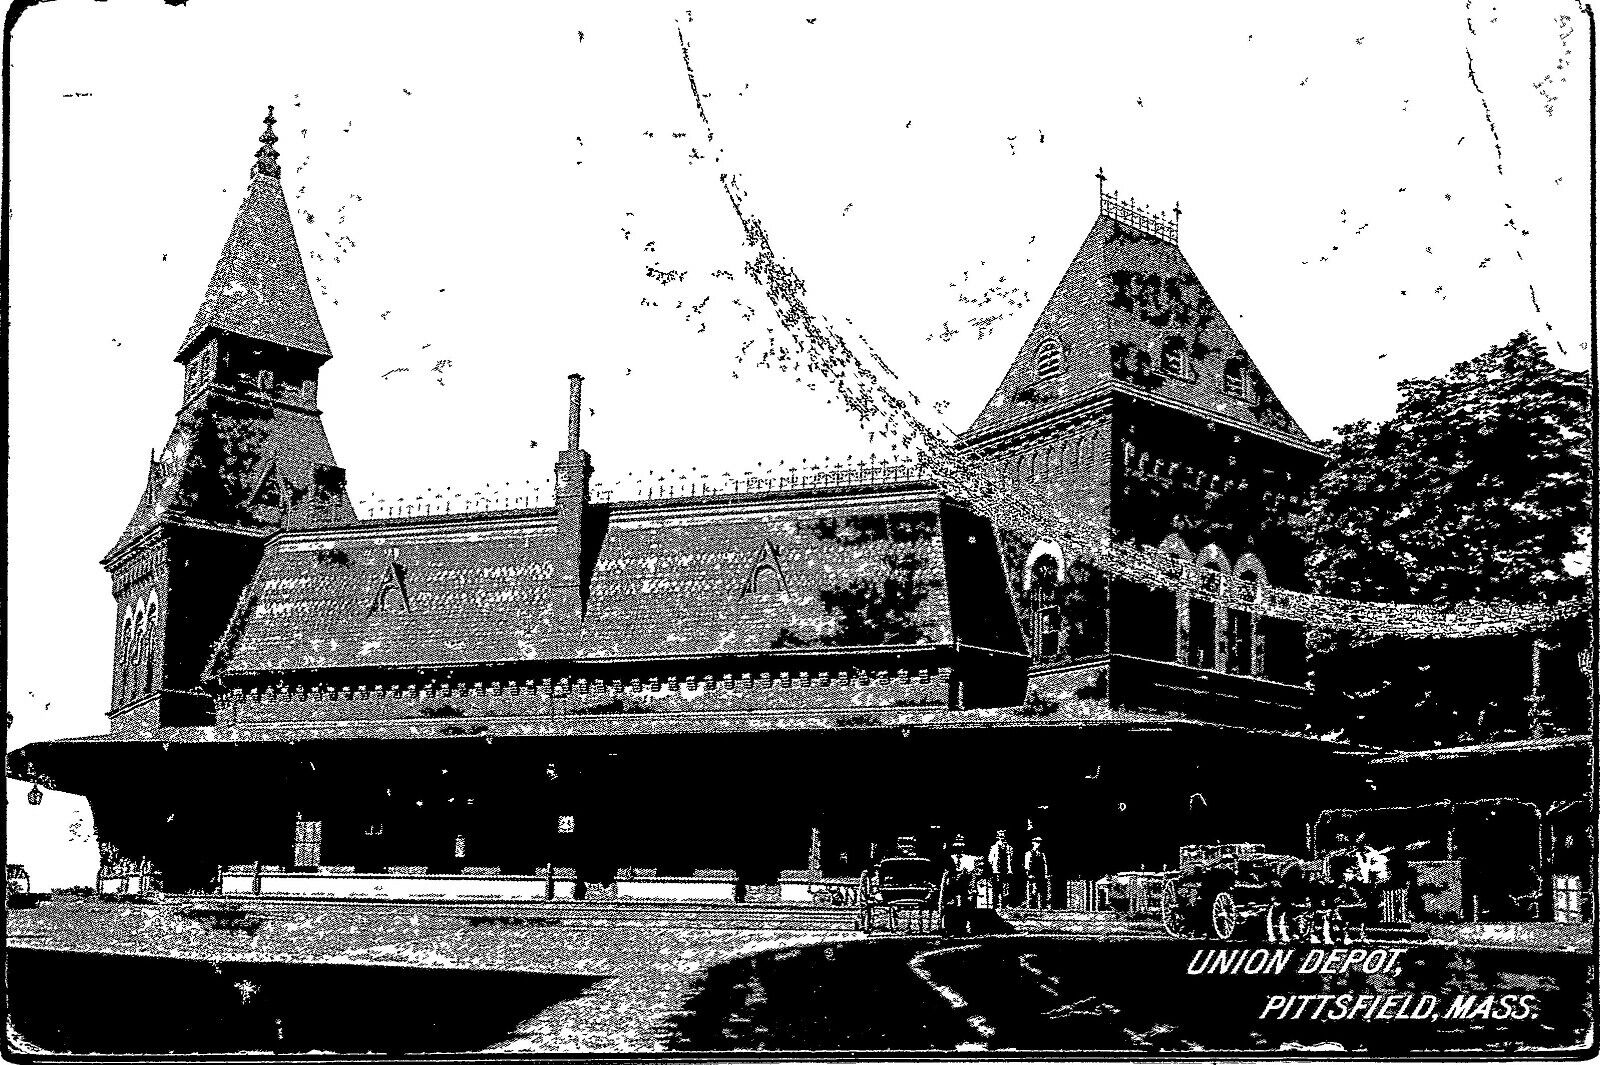 Union Depot Pittsfield MA postcard 1909